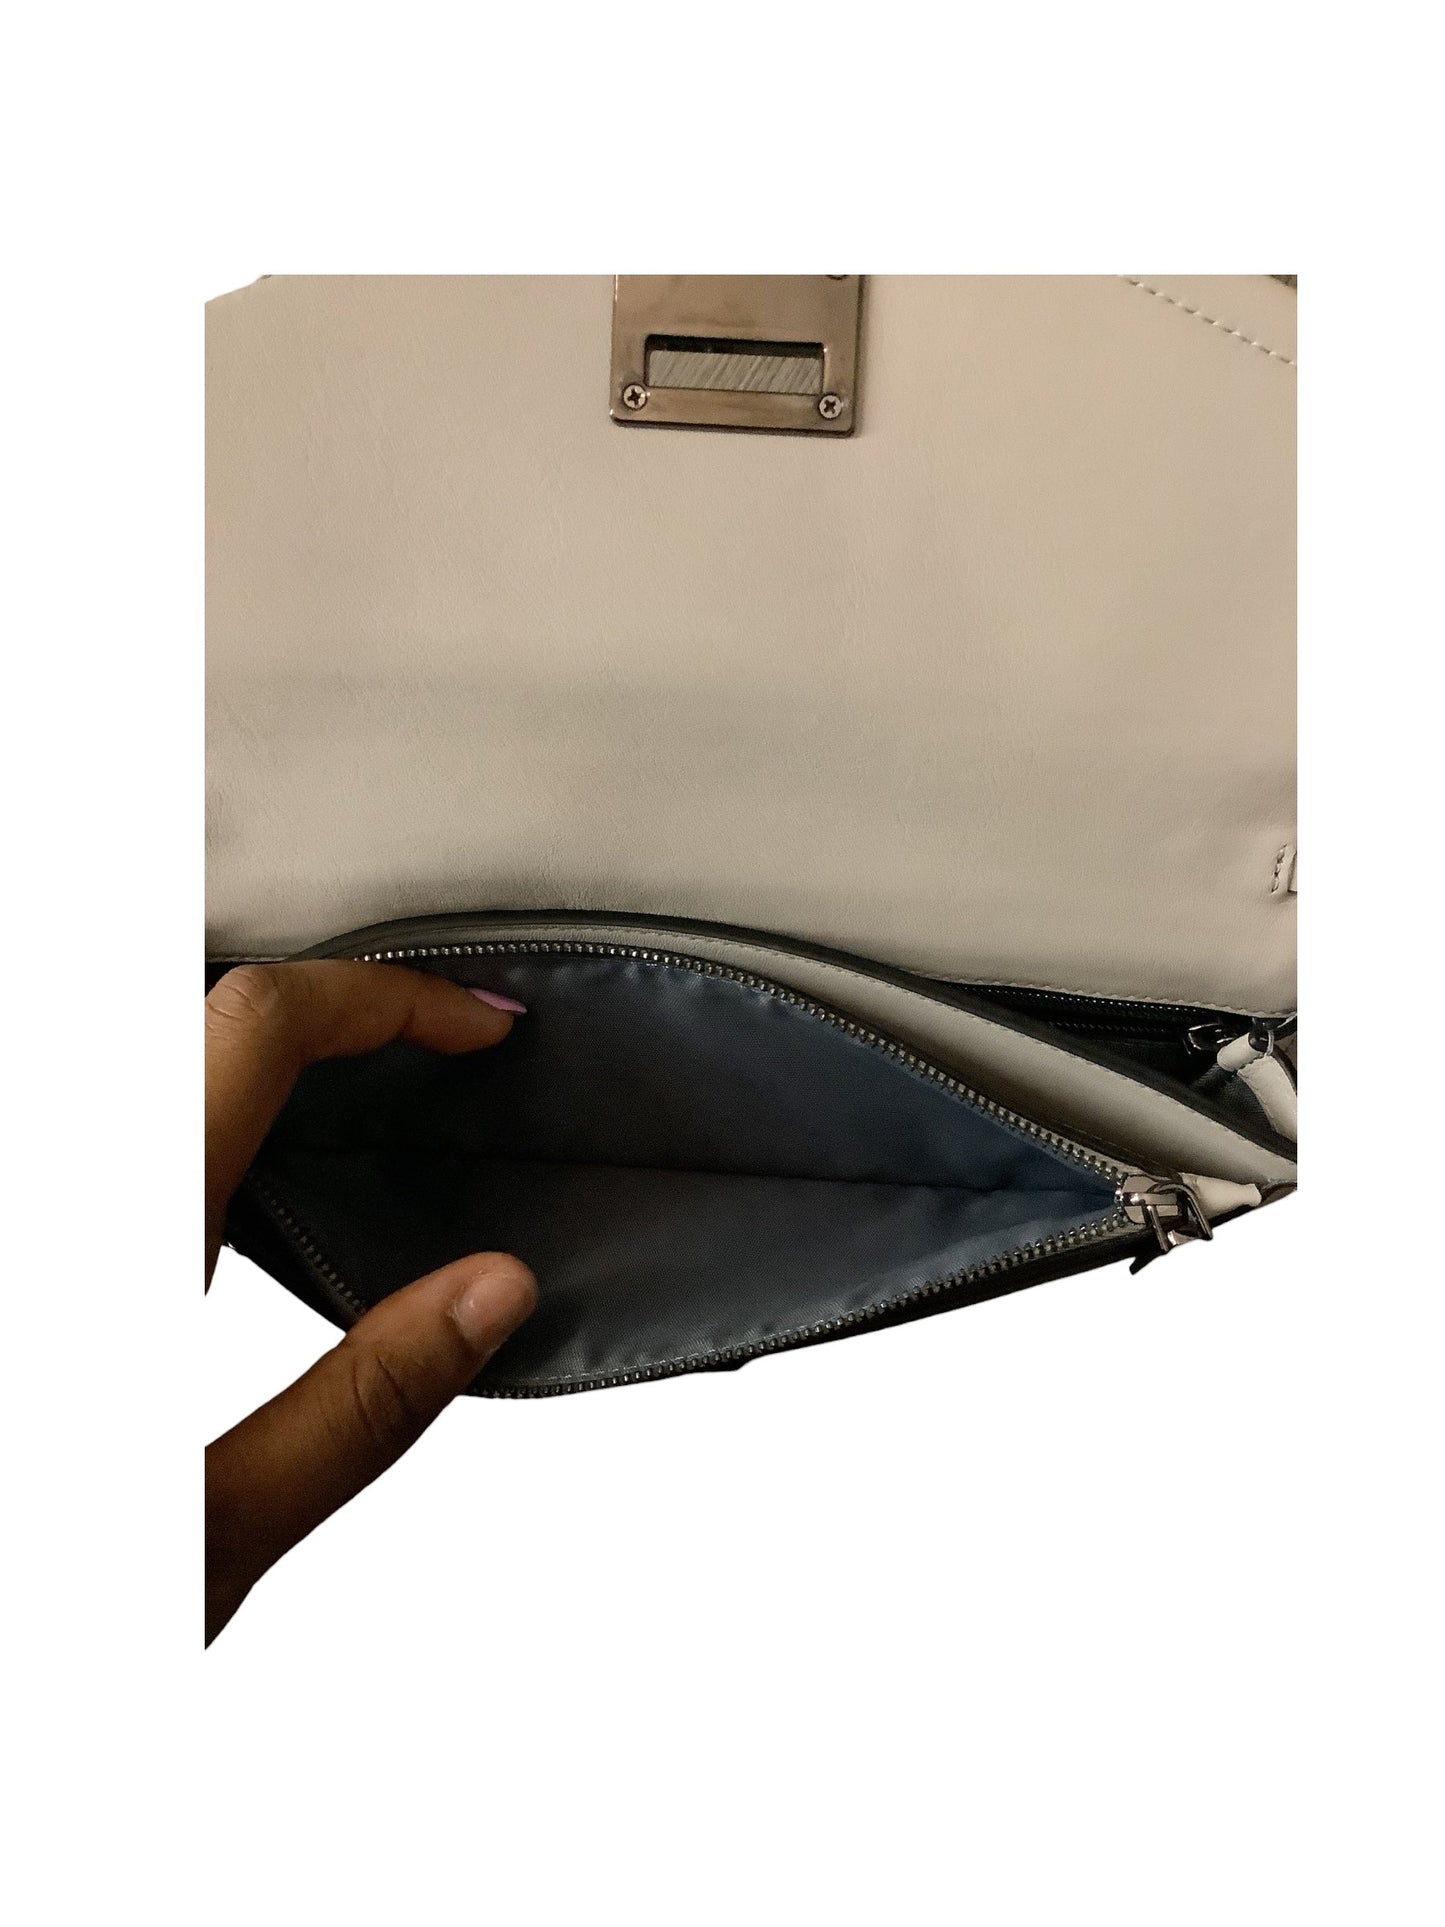 Handbag Leather Tumi, Size Small